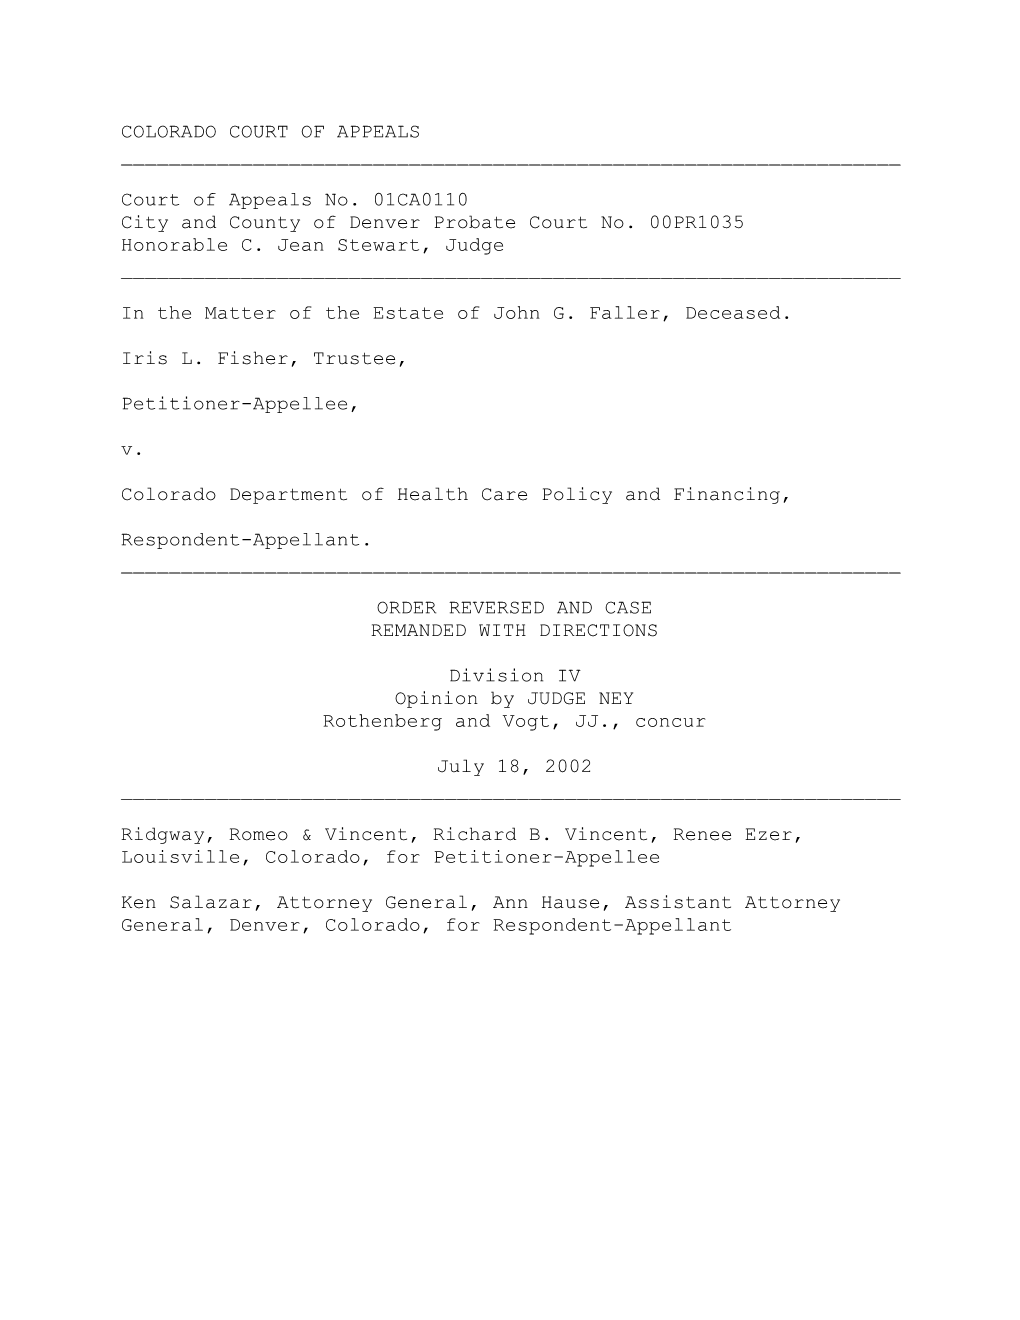 City and County of Denver Probate Court No. 00PR1035